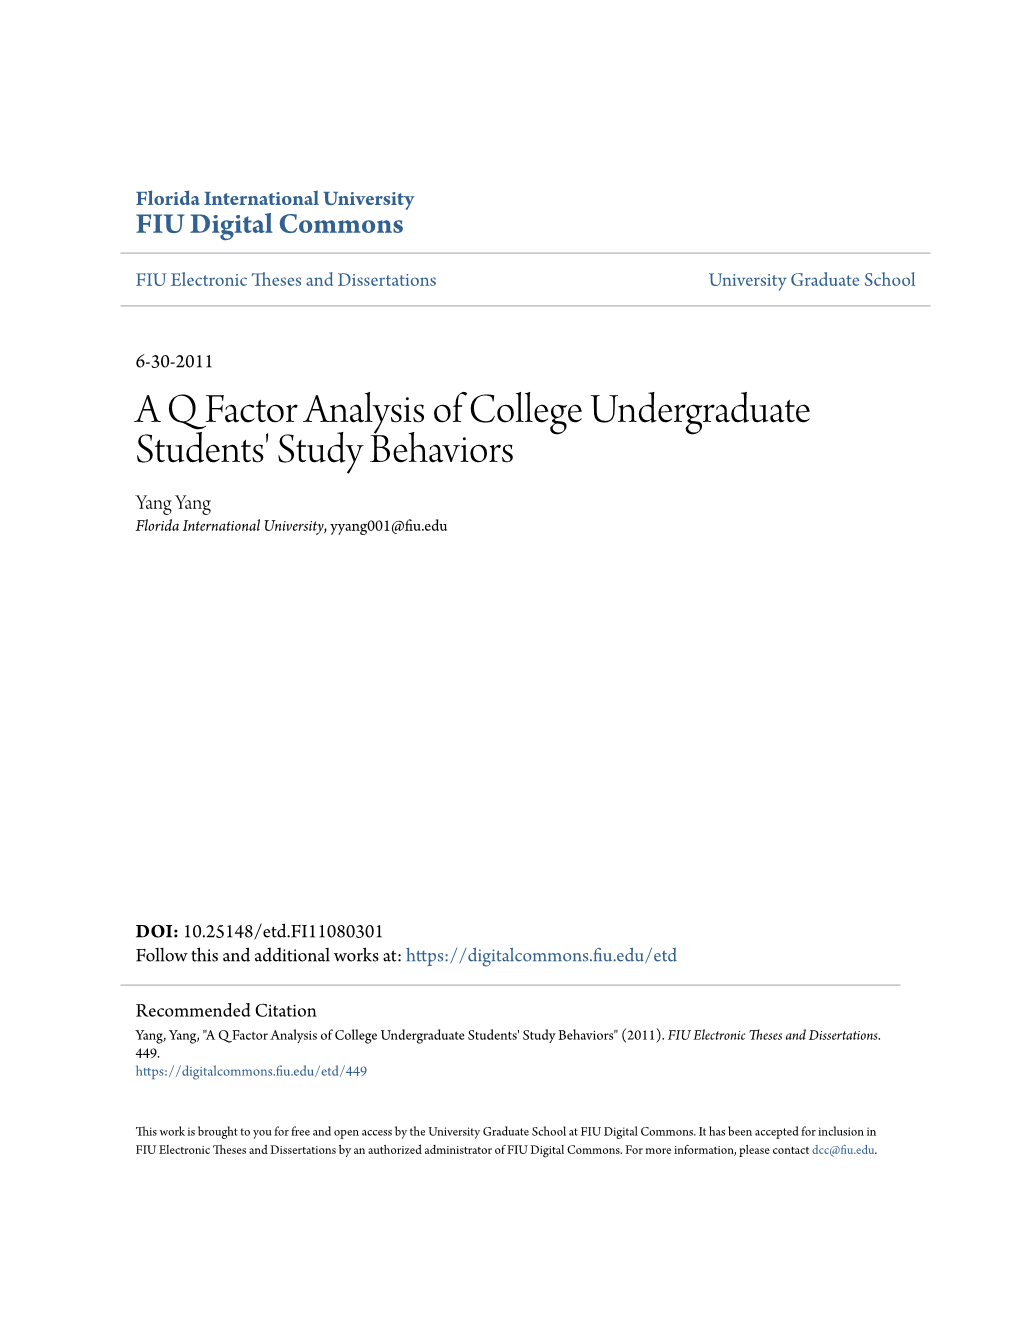 A Q Factor Analysis of College Undergraduate Students' Study Behaviors Yang Yang Florida International University, Yyang001@Fiu.Edu